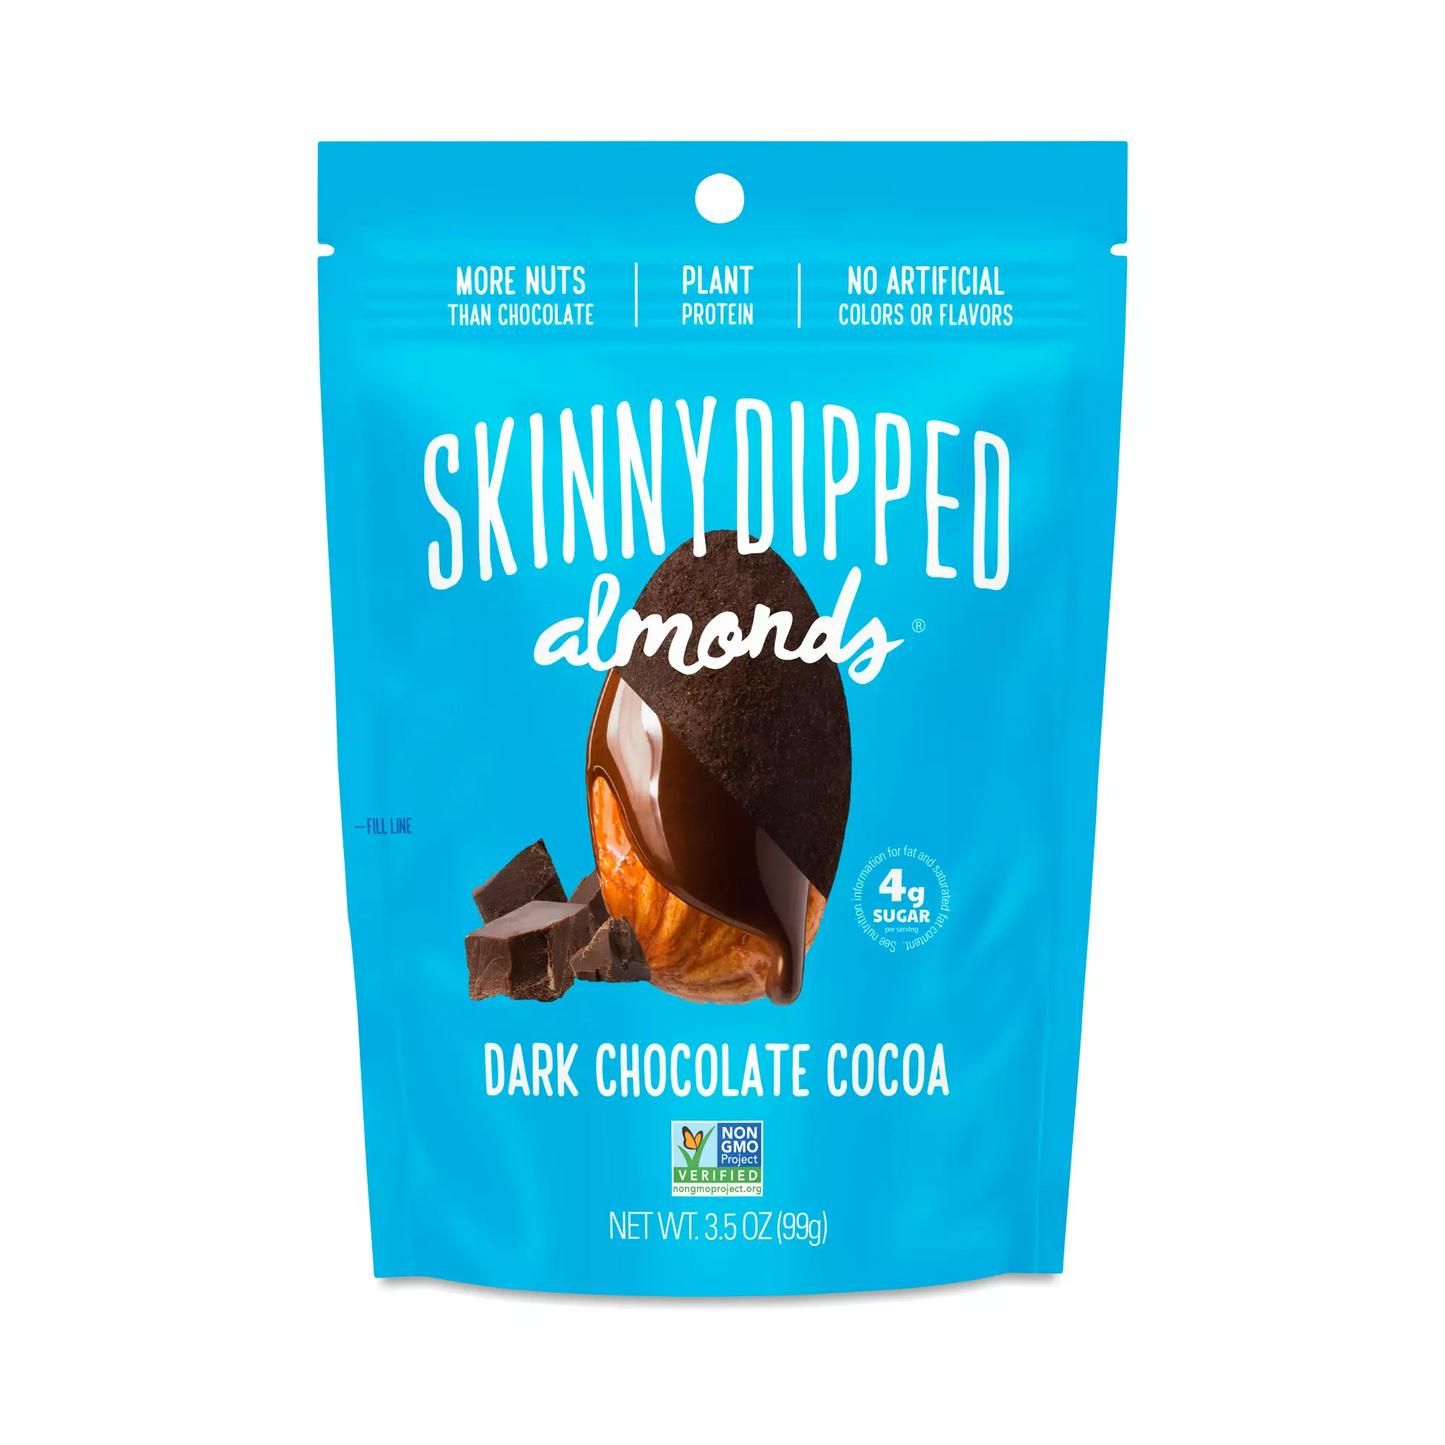 Dark Chocolate Cocoa Skinny Dipped Almonds